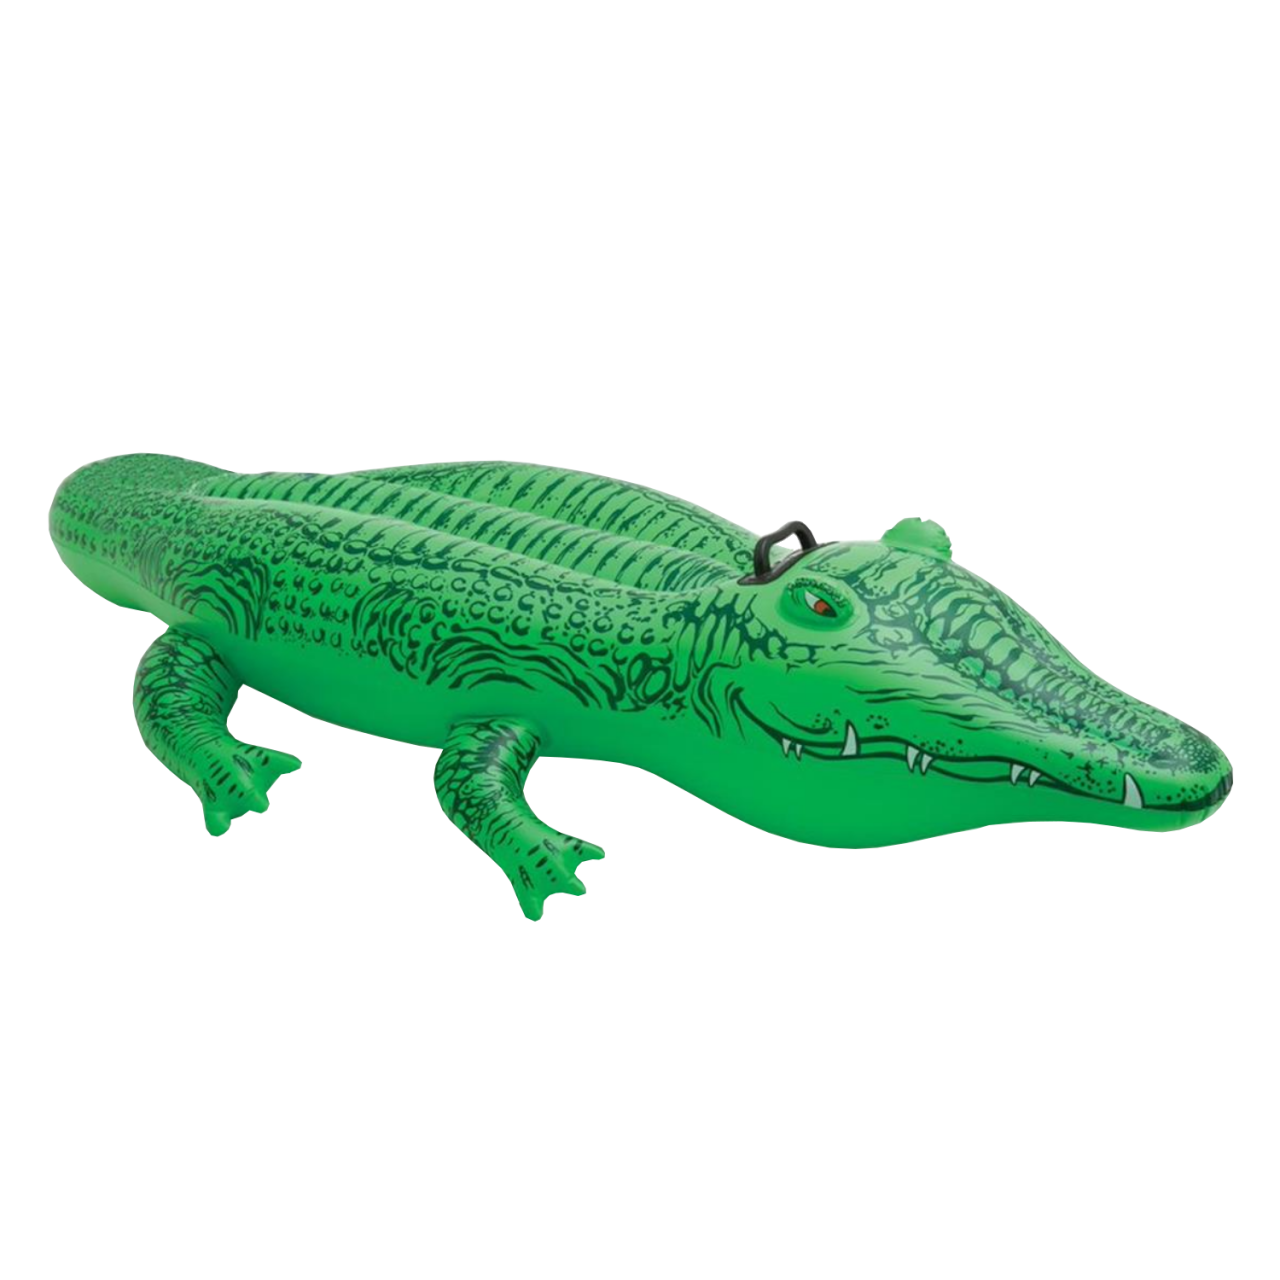 Intex Aufblasbares Krokodil Badetier Schwimmtier 168 x 86cm Badespielzeug 58546